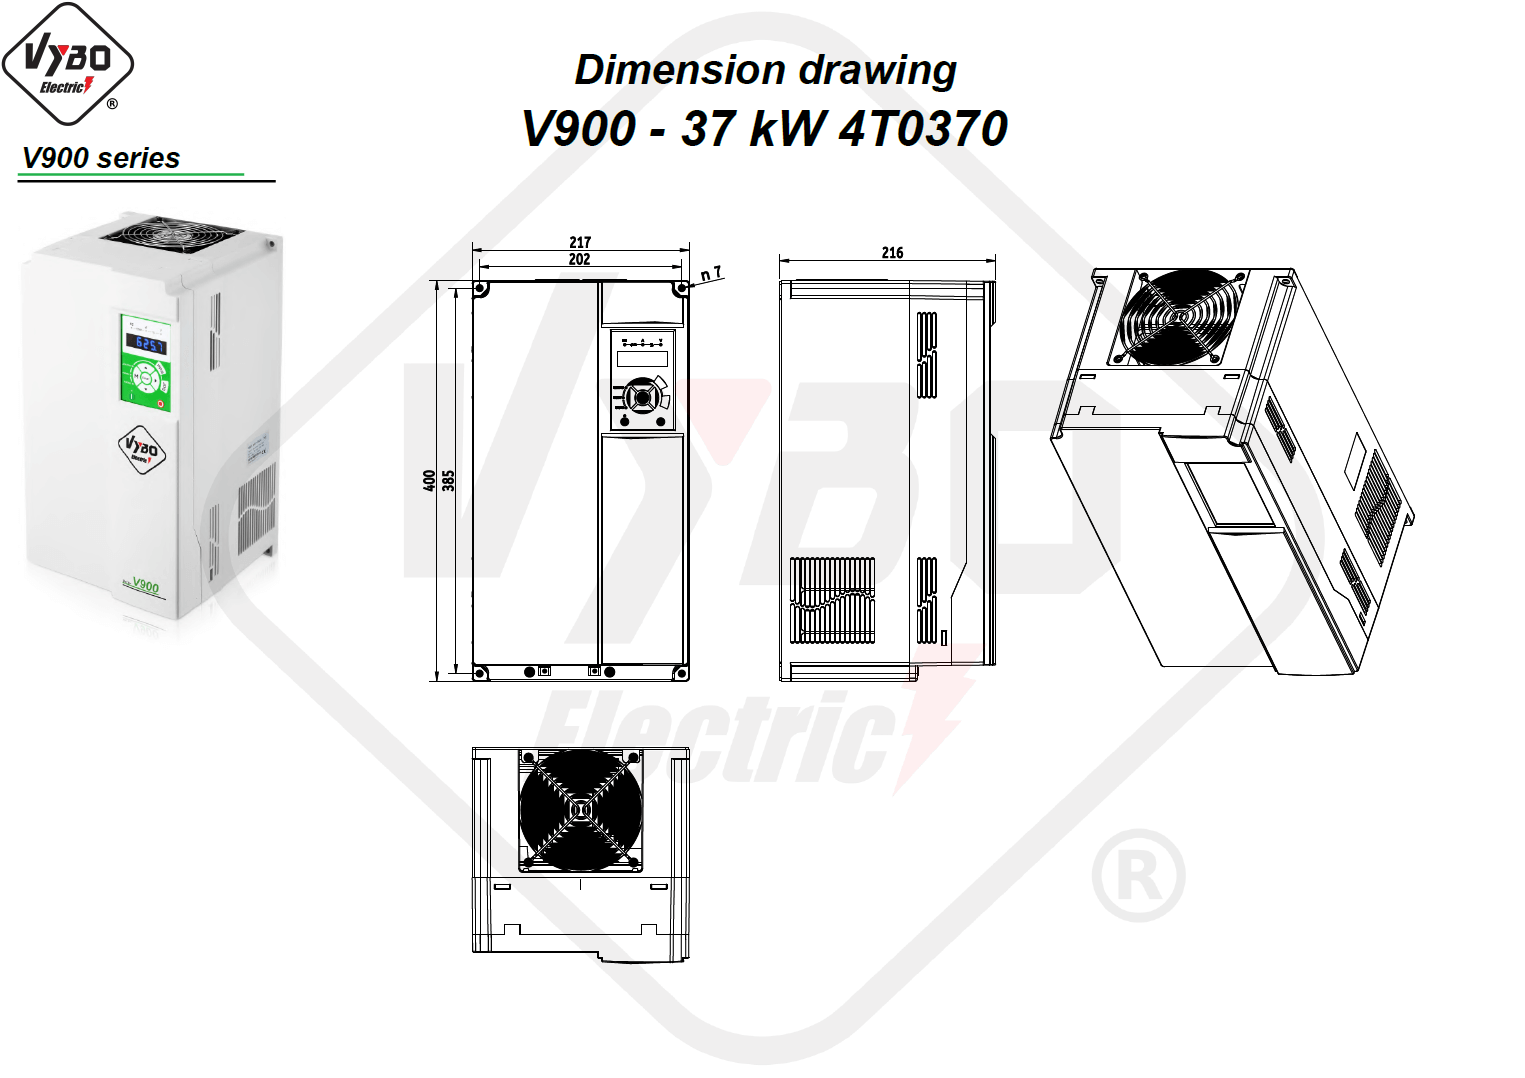 Dimensional drawing V900 4T0370